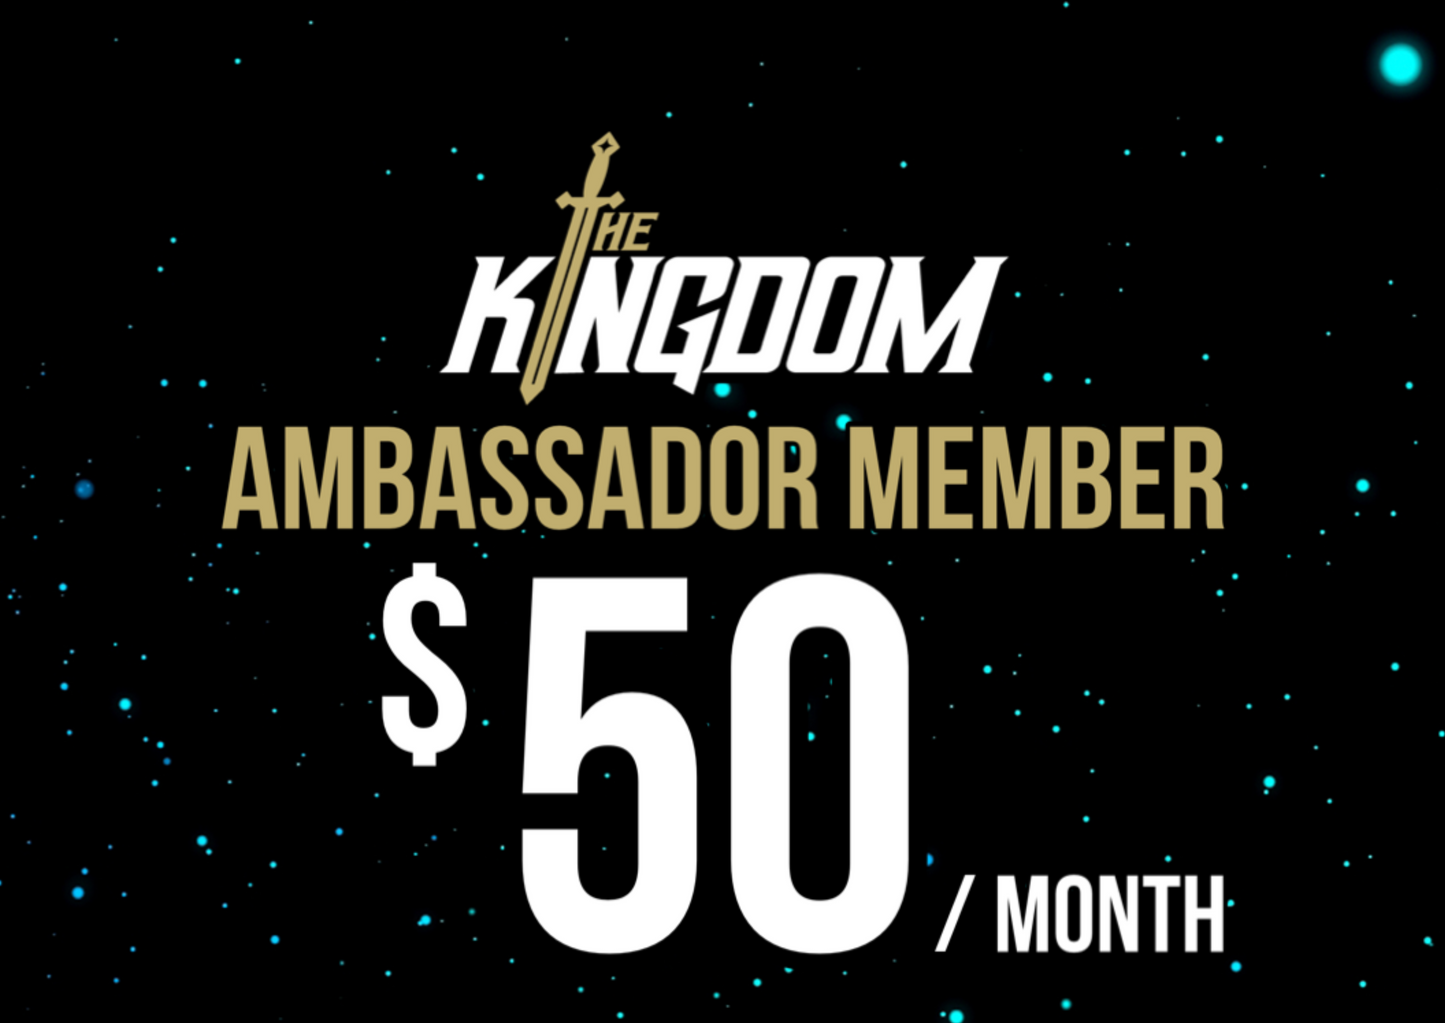 Kingdom Ambassador Member: $50 per Month